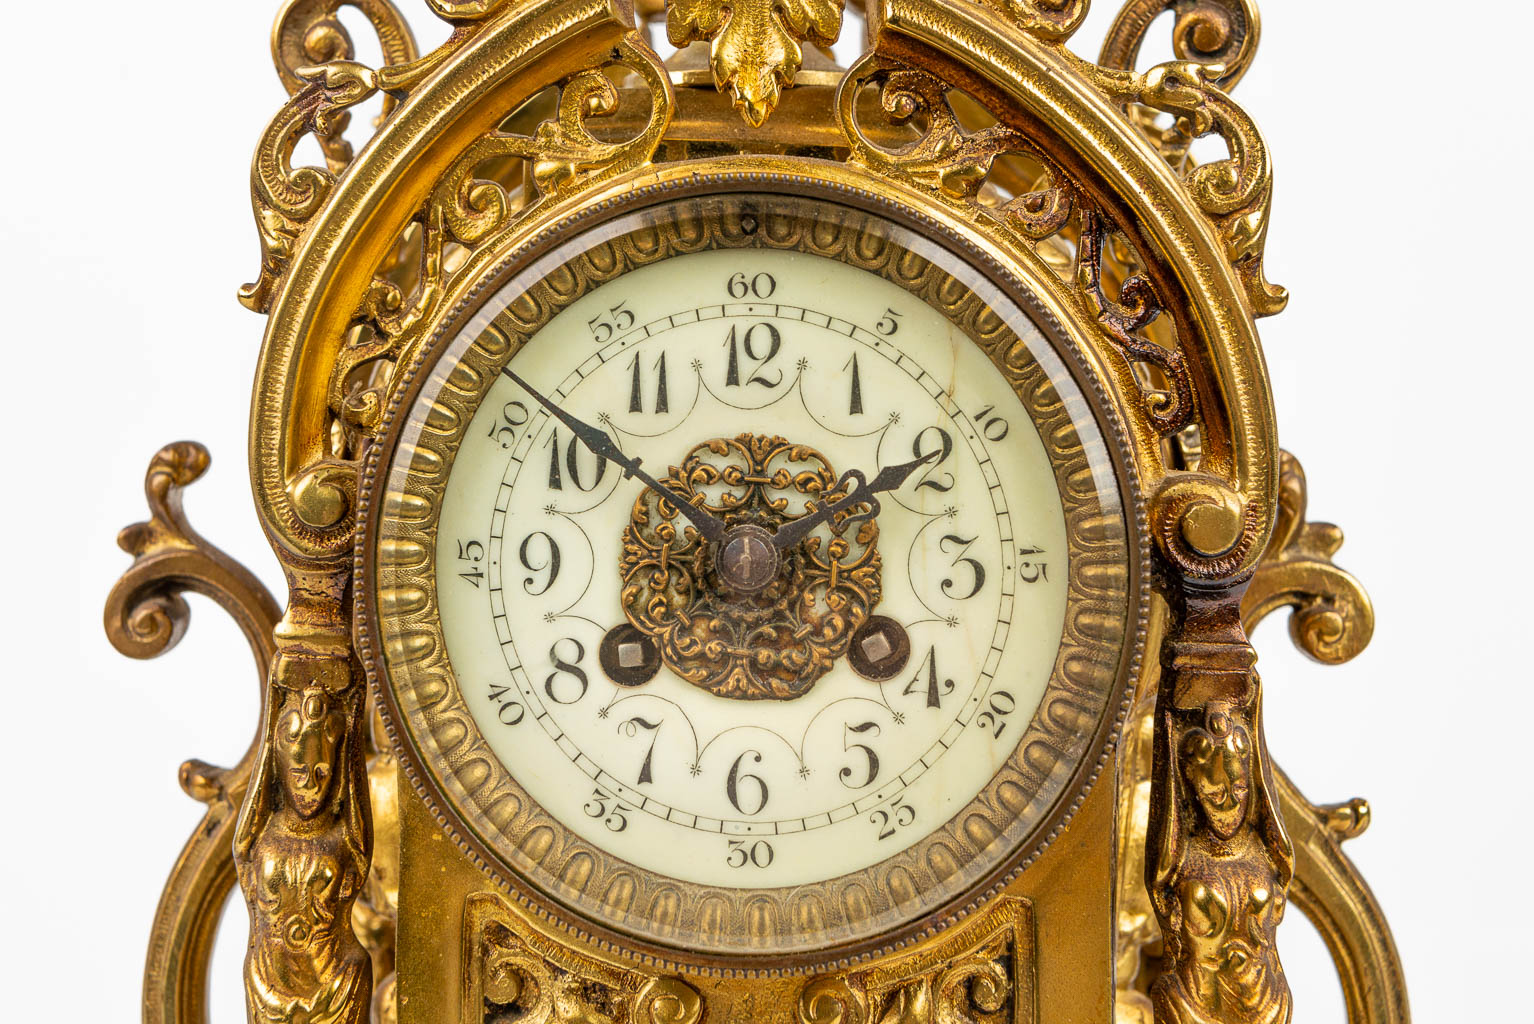 A three-piece mantle clock made of bronze. (H:50cm)